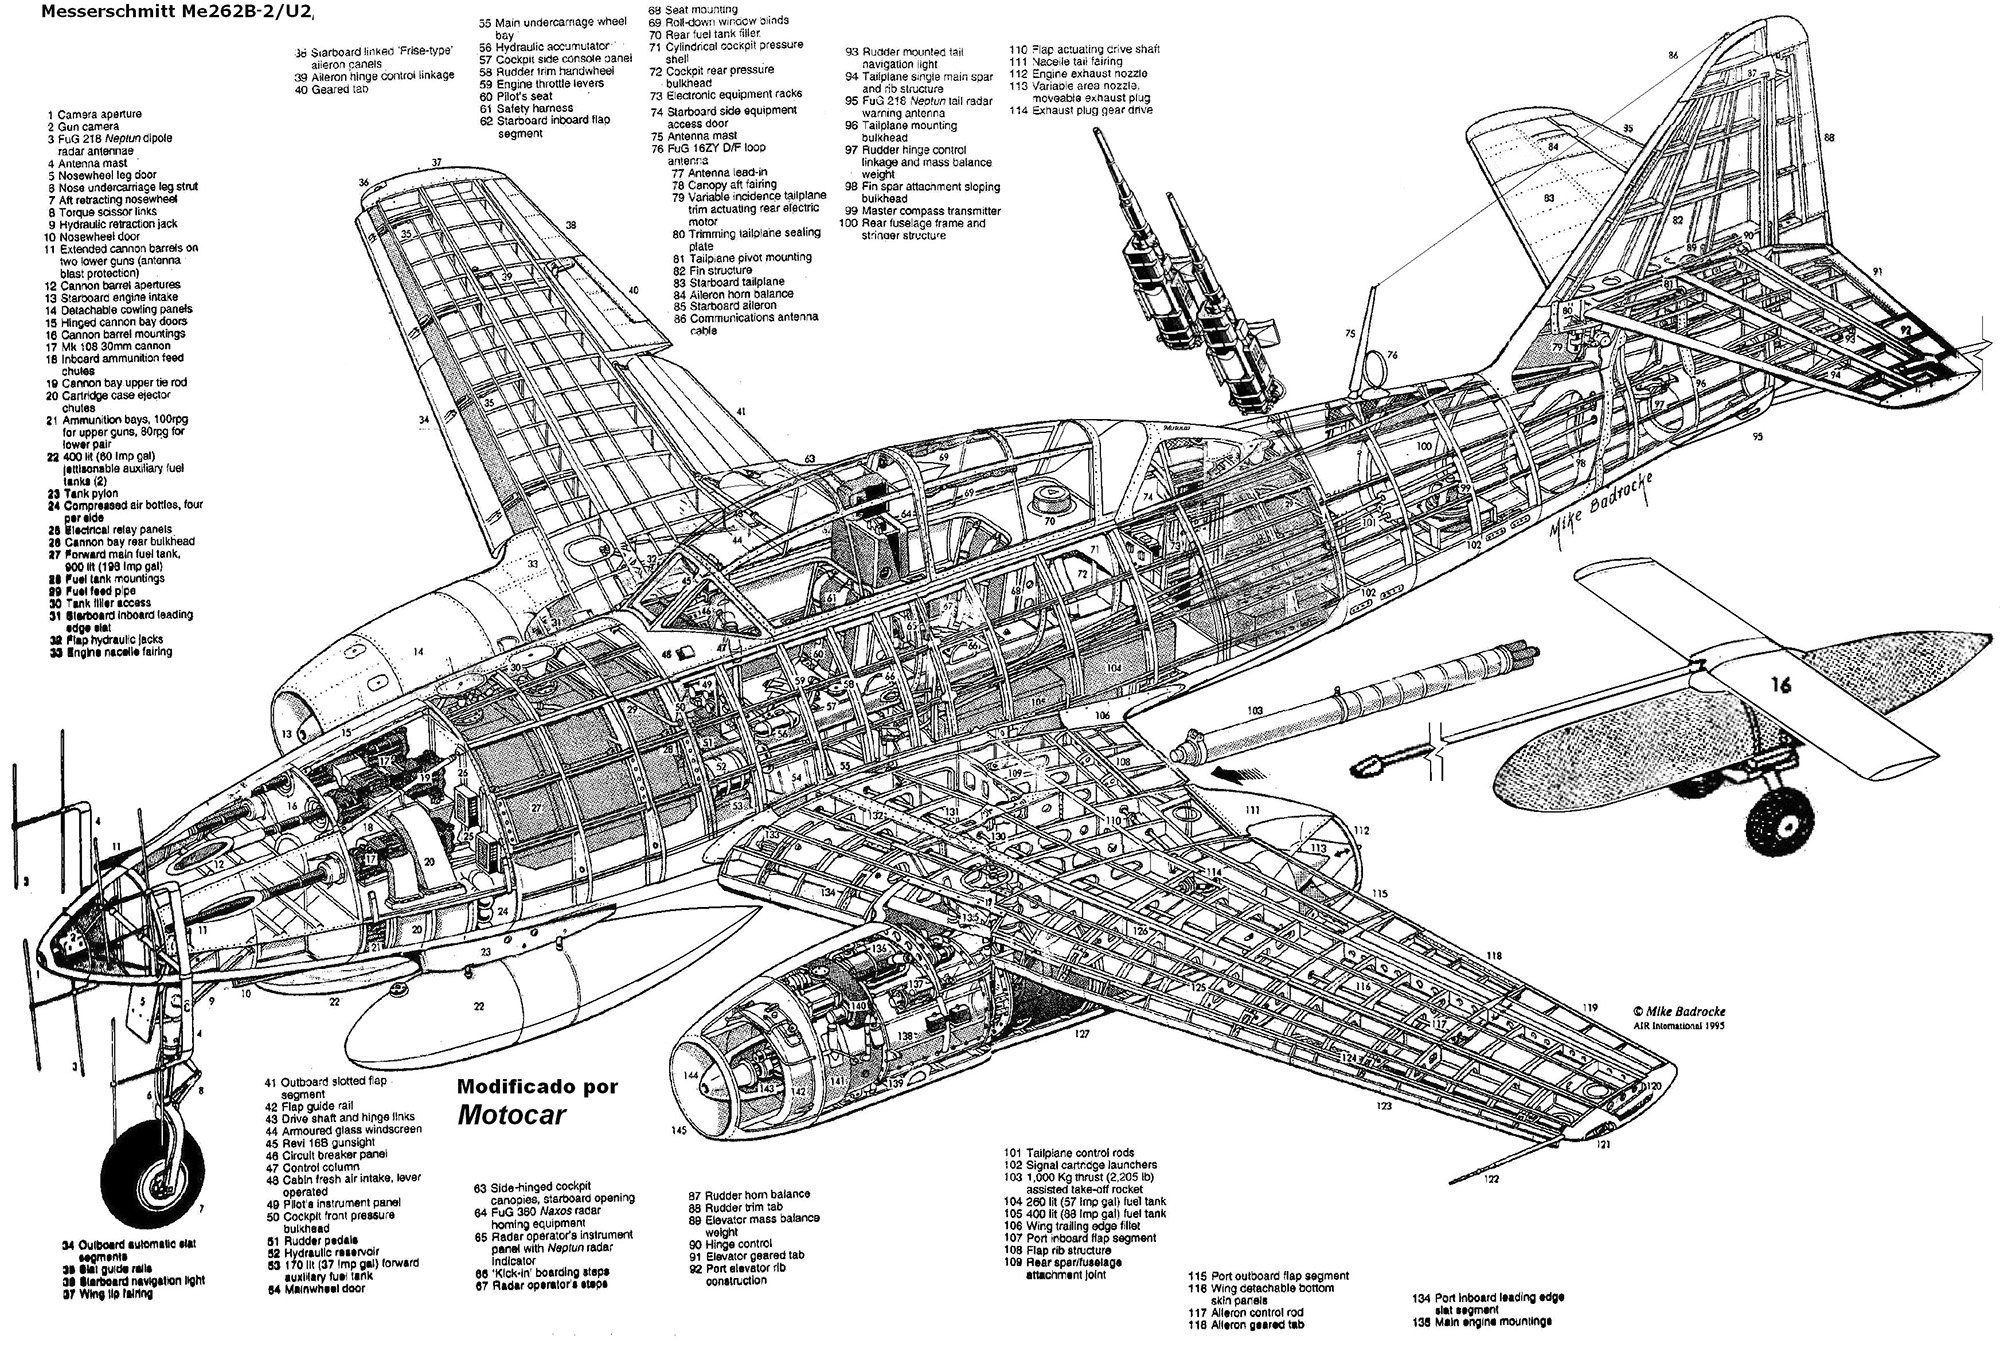 Messerschmitt Me-262 PDF eBook & Aircraft Flight Manual | AirWingMedia.com